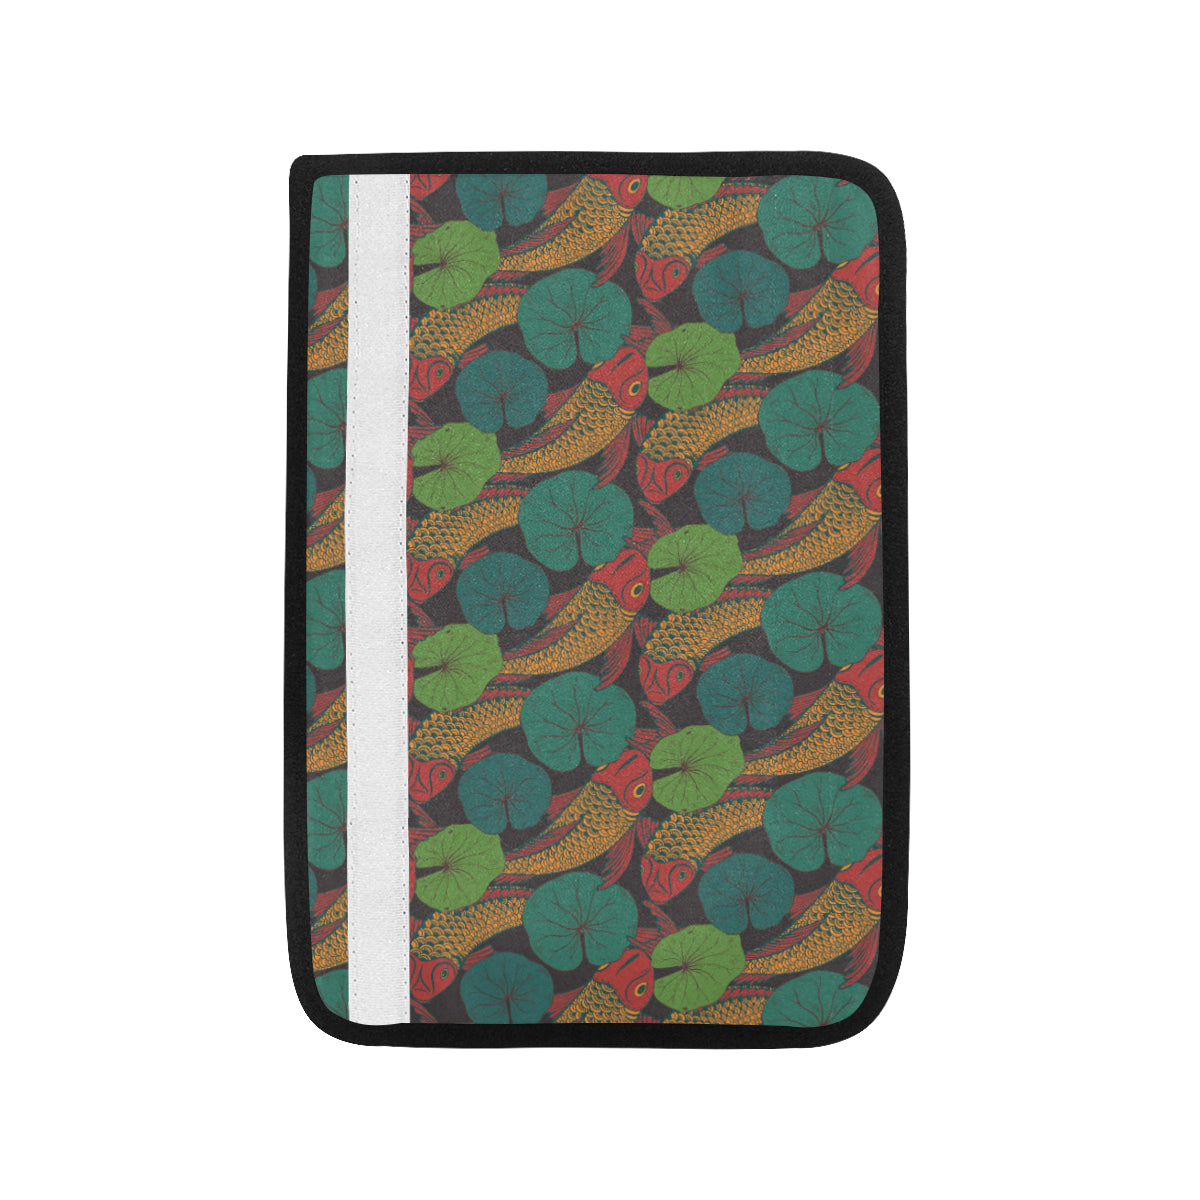 KOI Fish Pattern Print Design 01 Car Seat Belt Cover